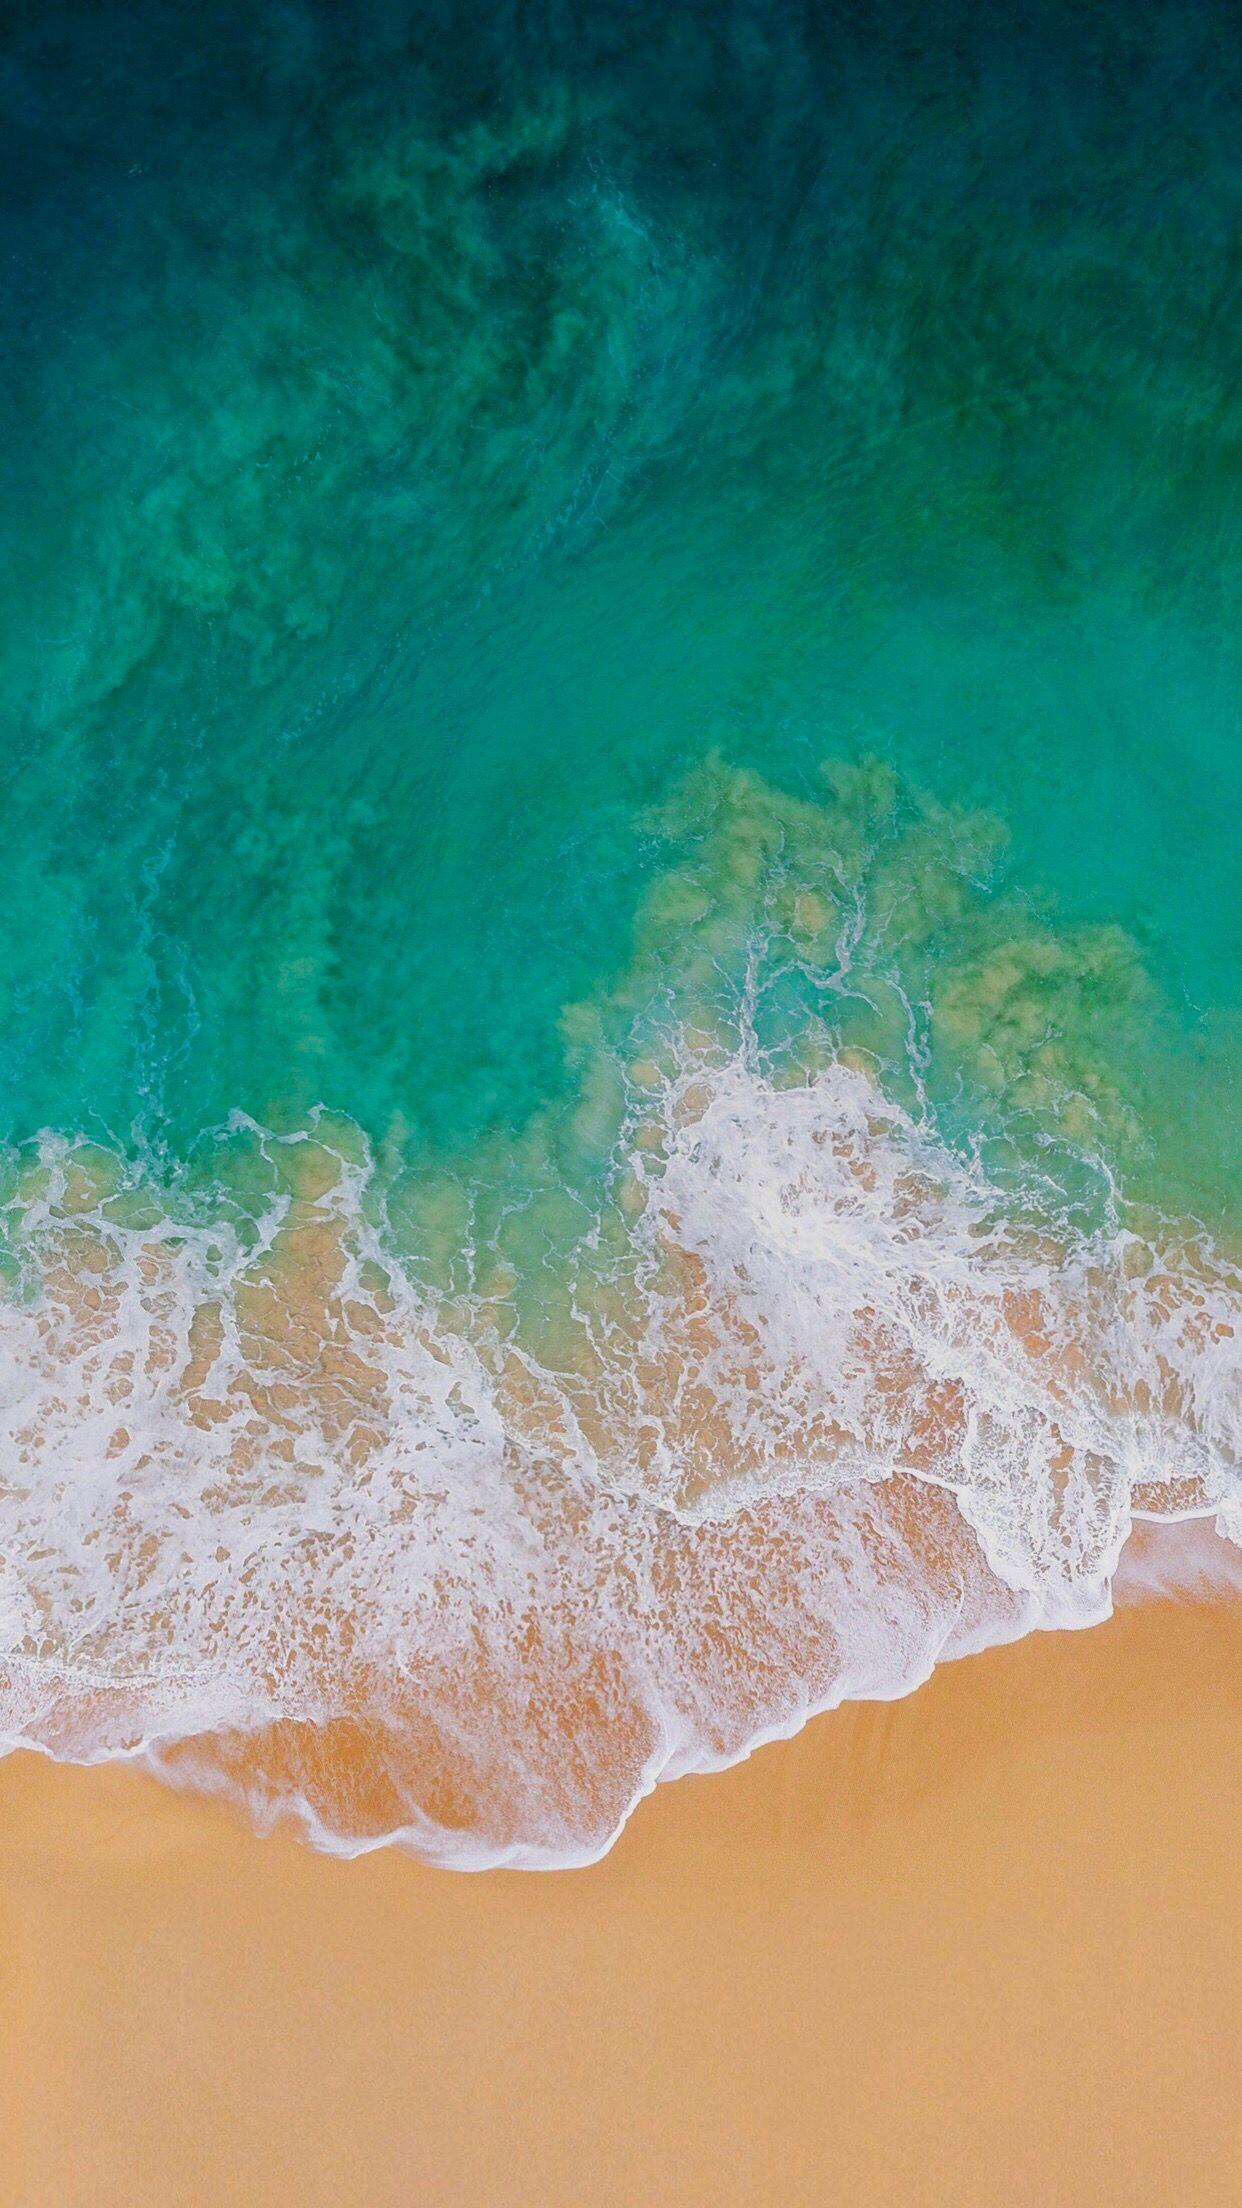 iOS Turquoise, sand, beach, ocean, abstract, apple, wallpaper, iPhone, clean, beauty, colour,. Ios 11 wallpaper, iPhone wallpaper ios iPhone wallpaper ios